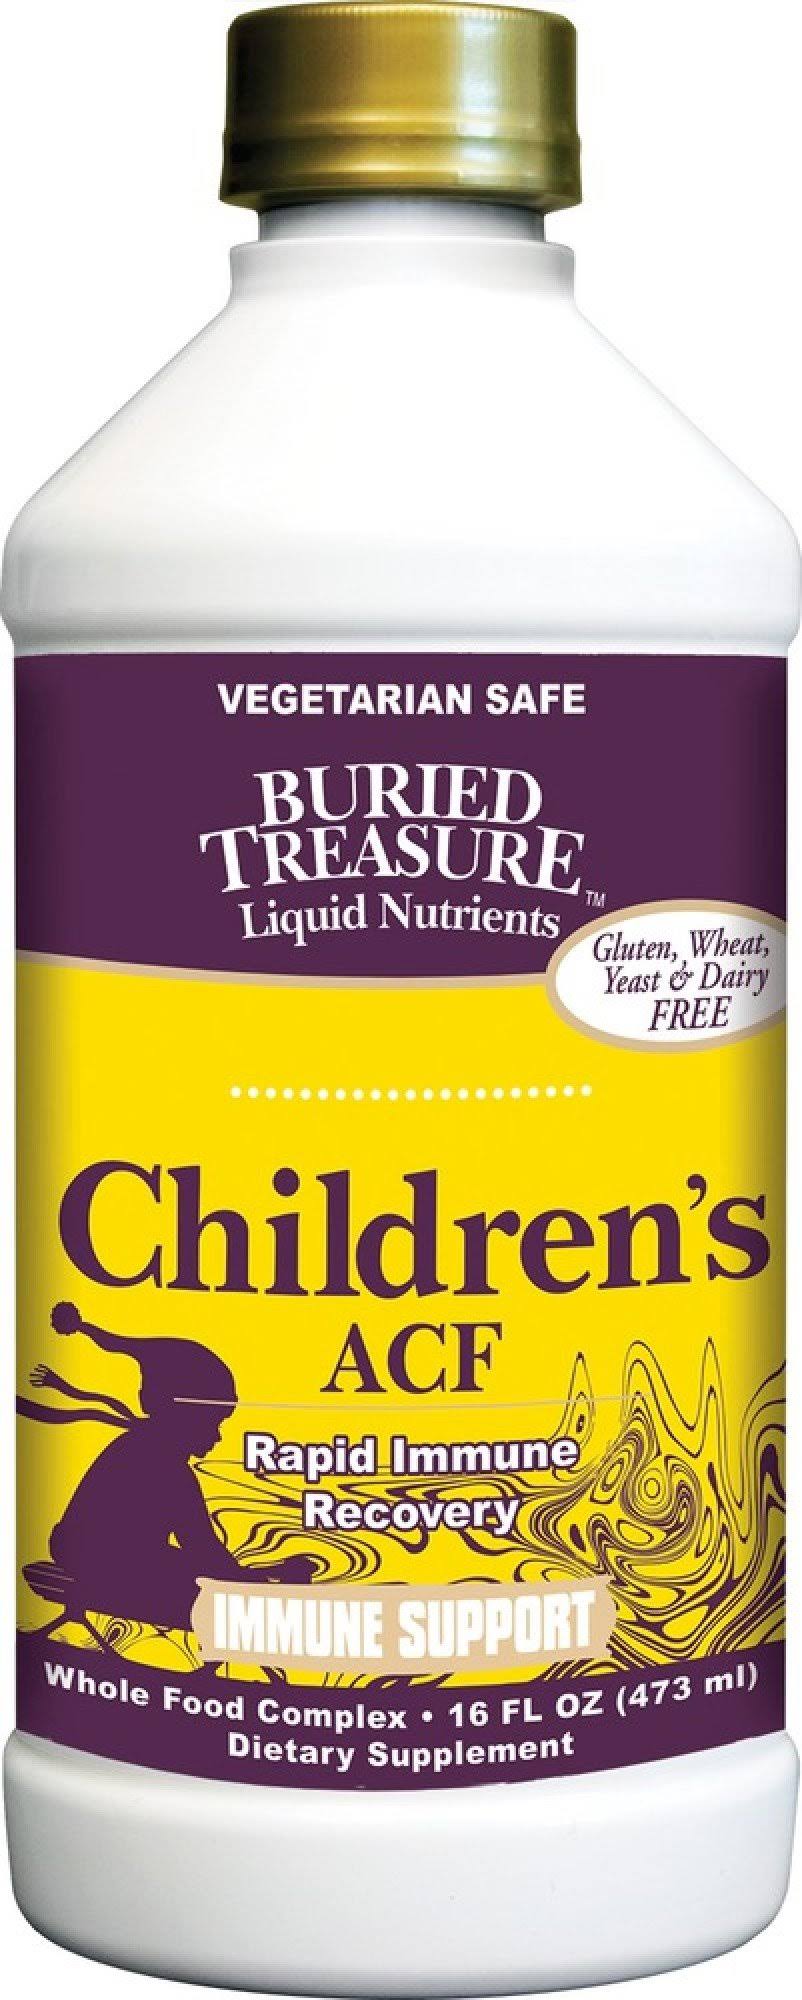 Buried Treasure Children's Acf Immune Support - 16oz